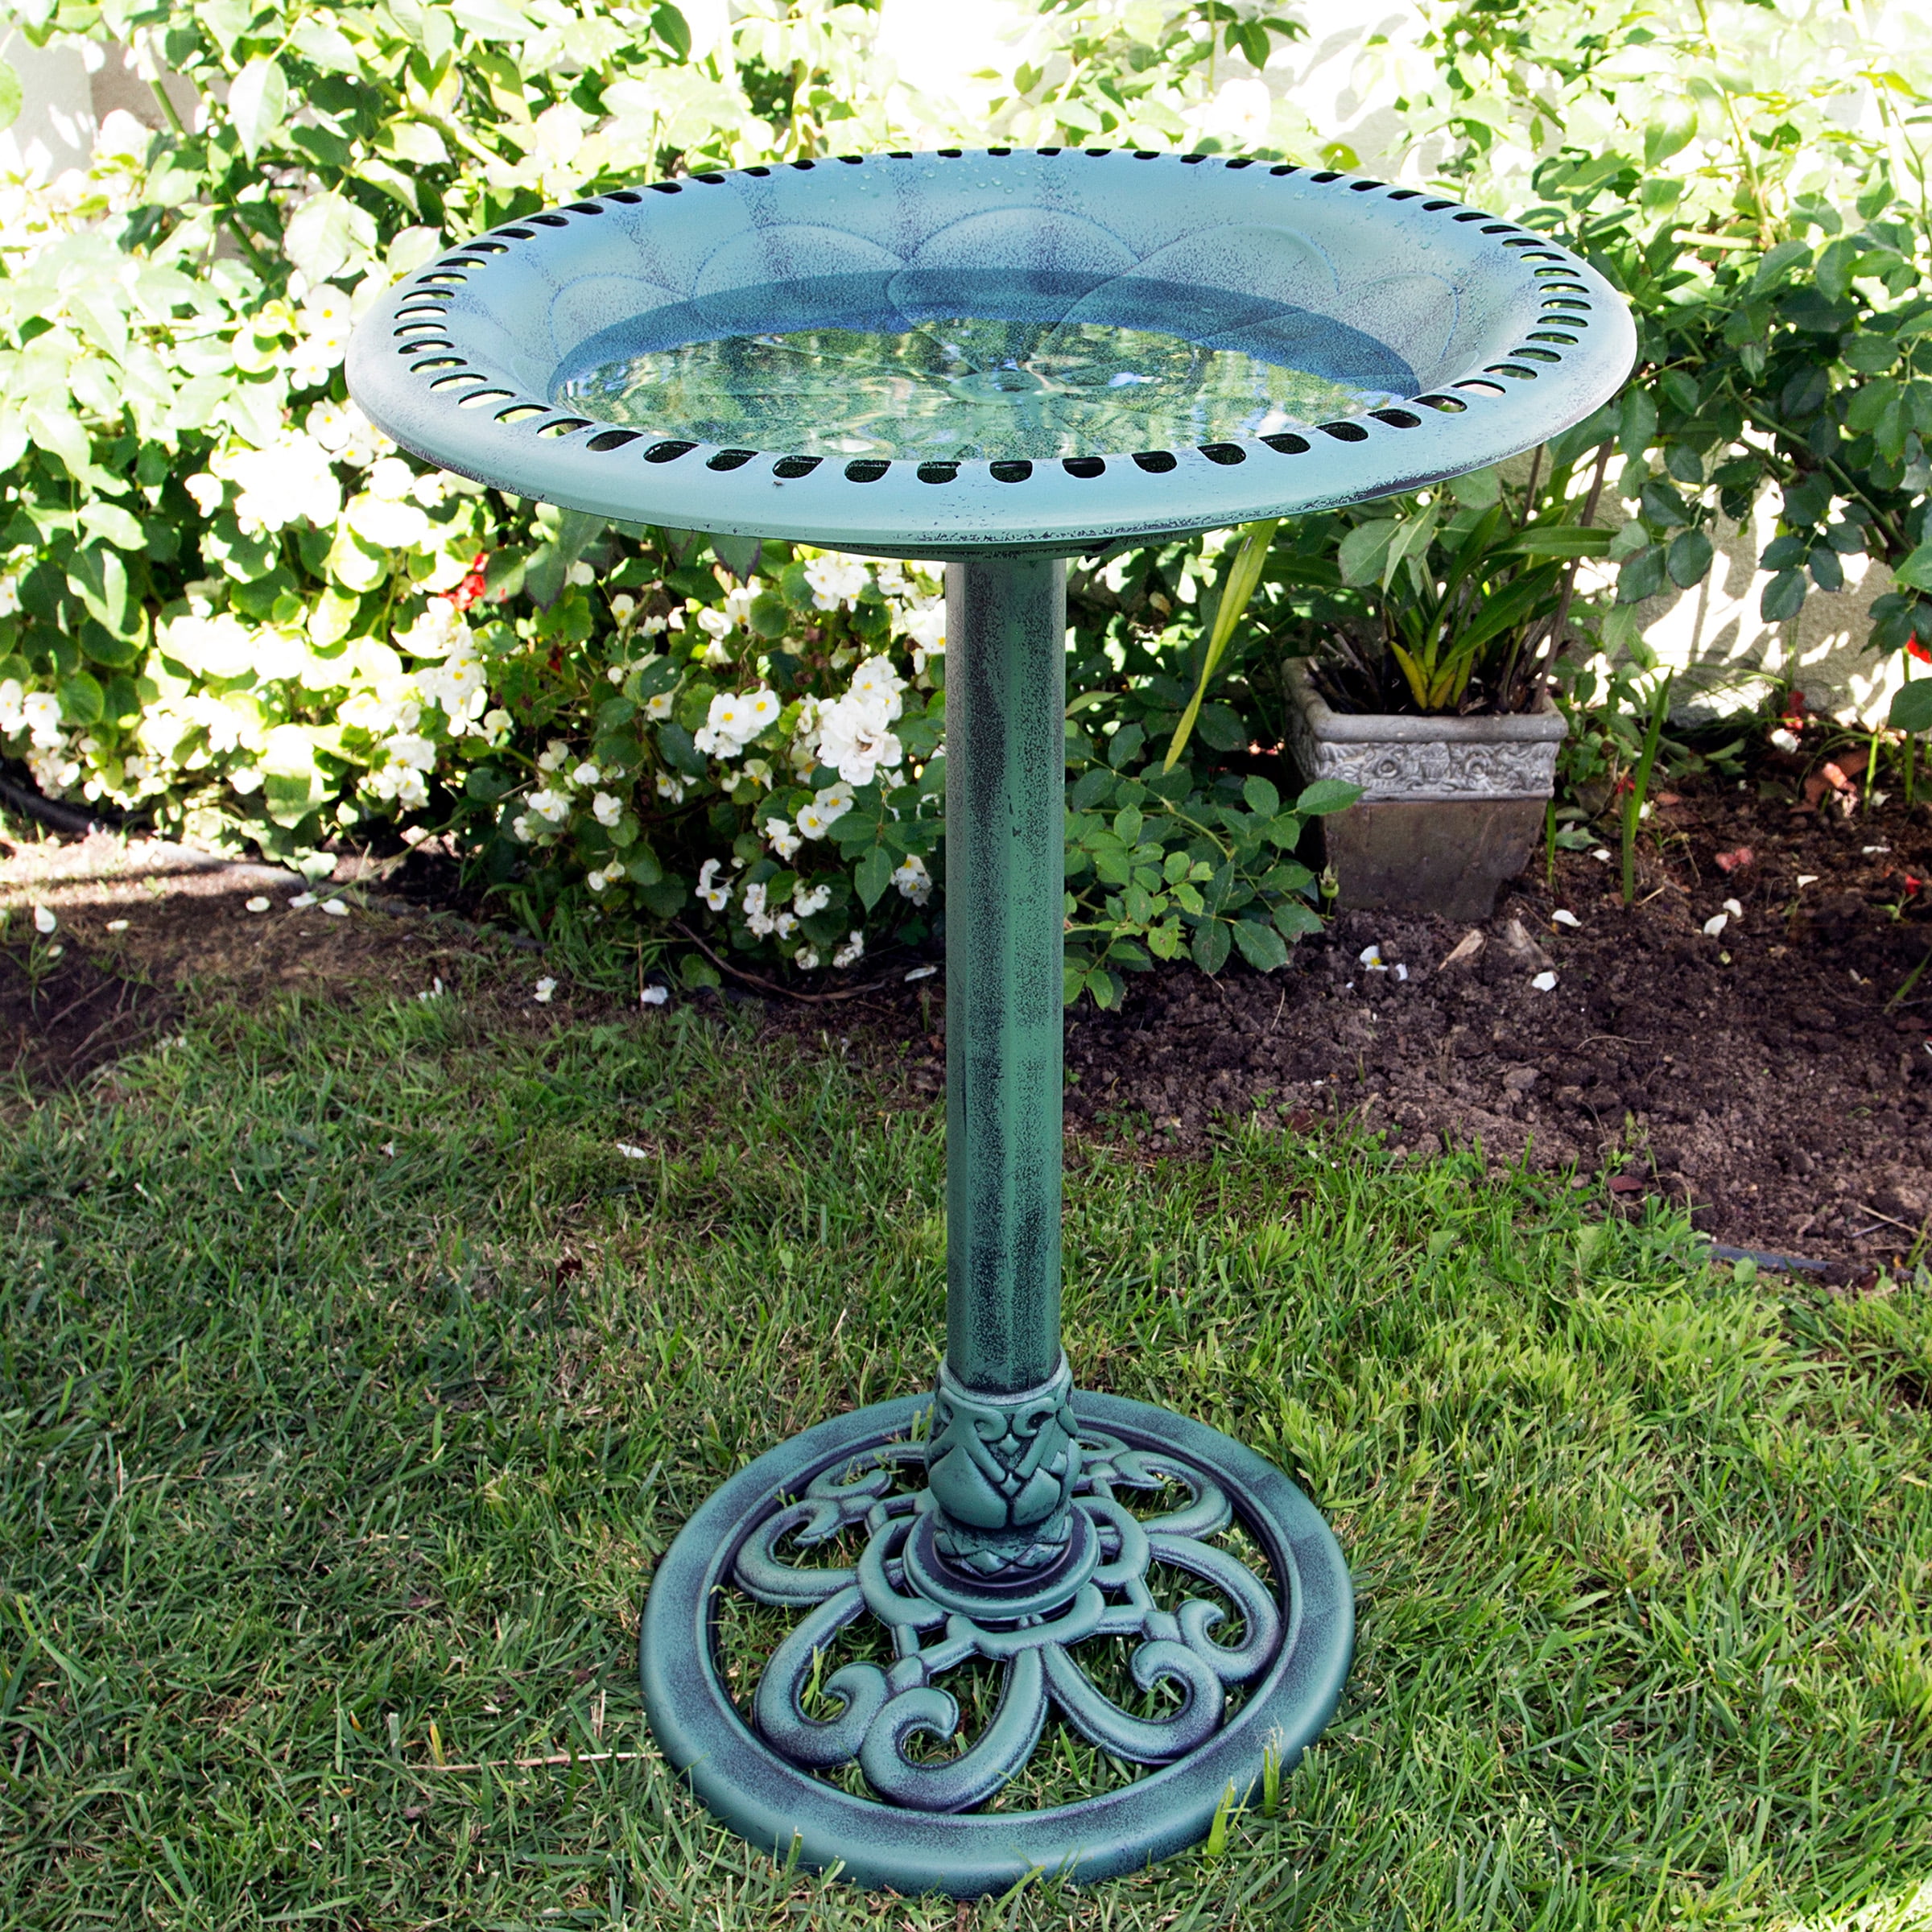 VIVOHOME Freestanding Pedestal Bird Bath Backyard Garden Water Food Feeder Bowl 